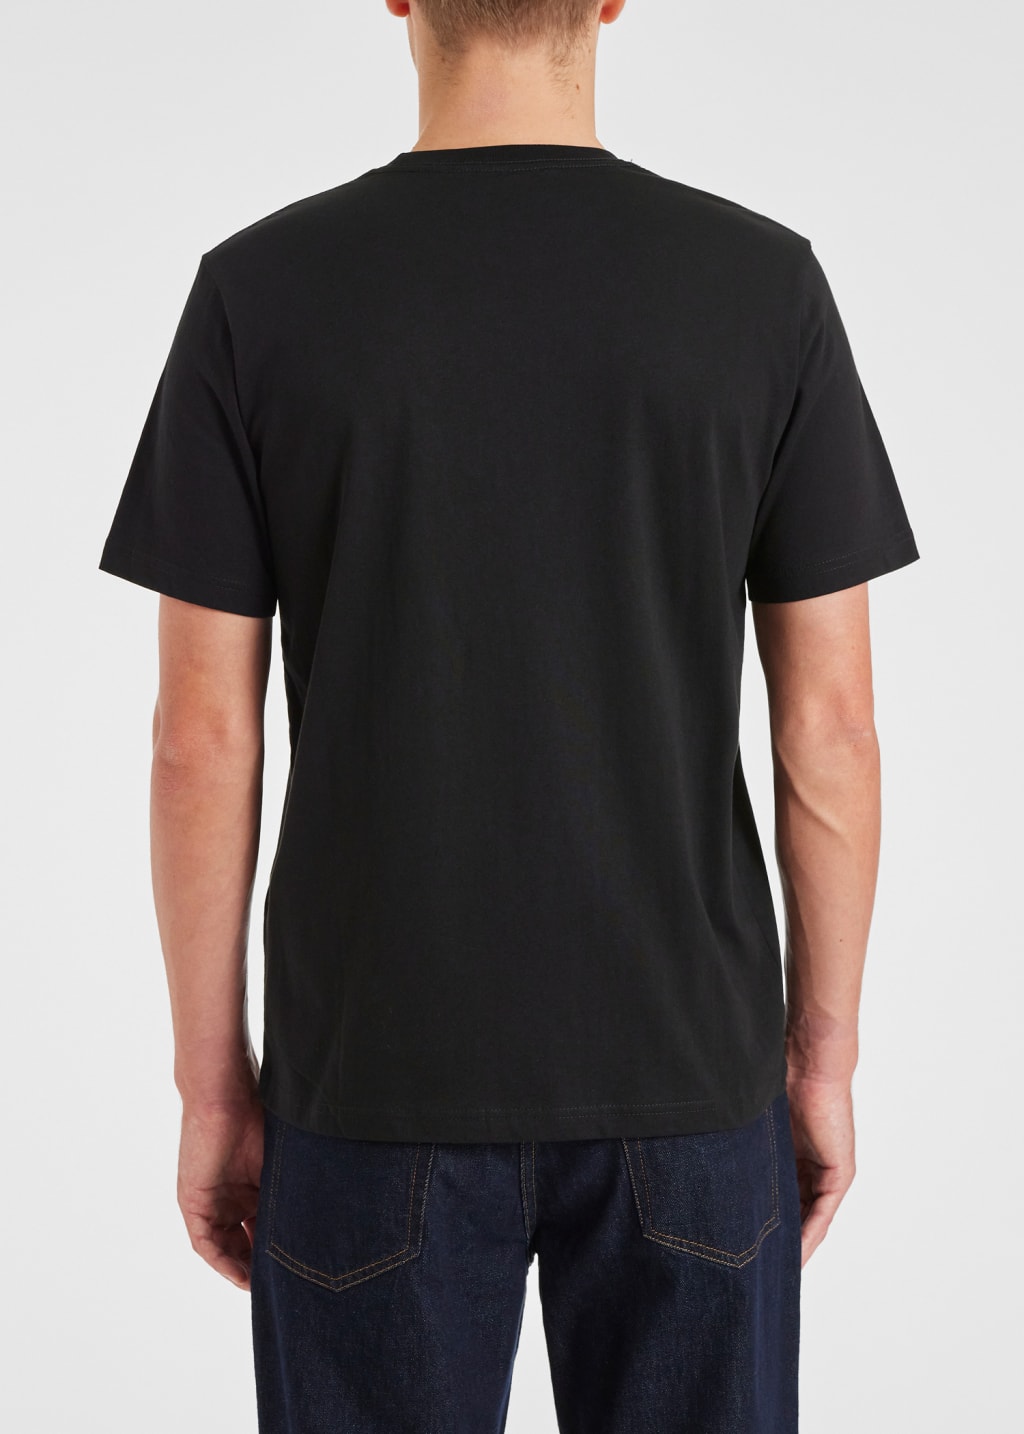 Model View - Slim-Fit Black 'Sticker Skull' T-Shirt Paul Smith